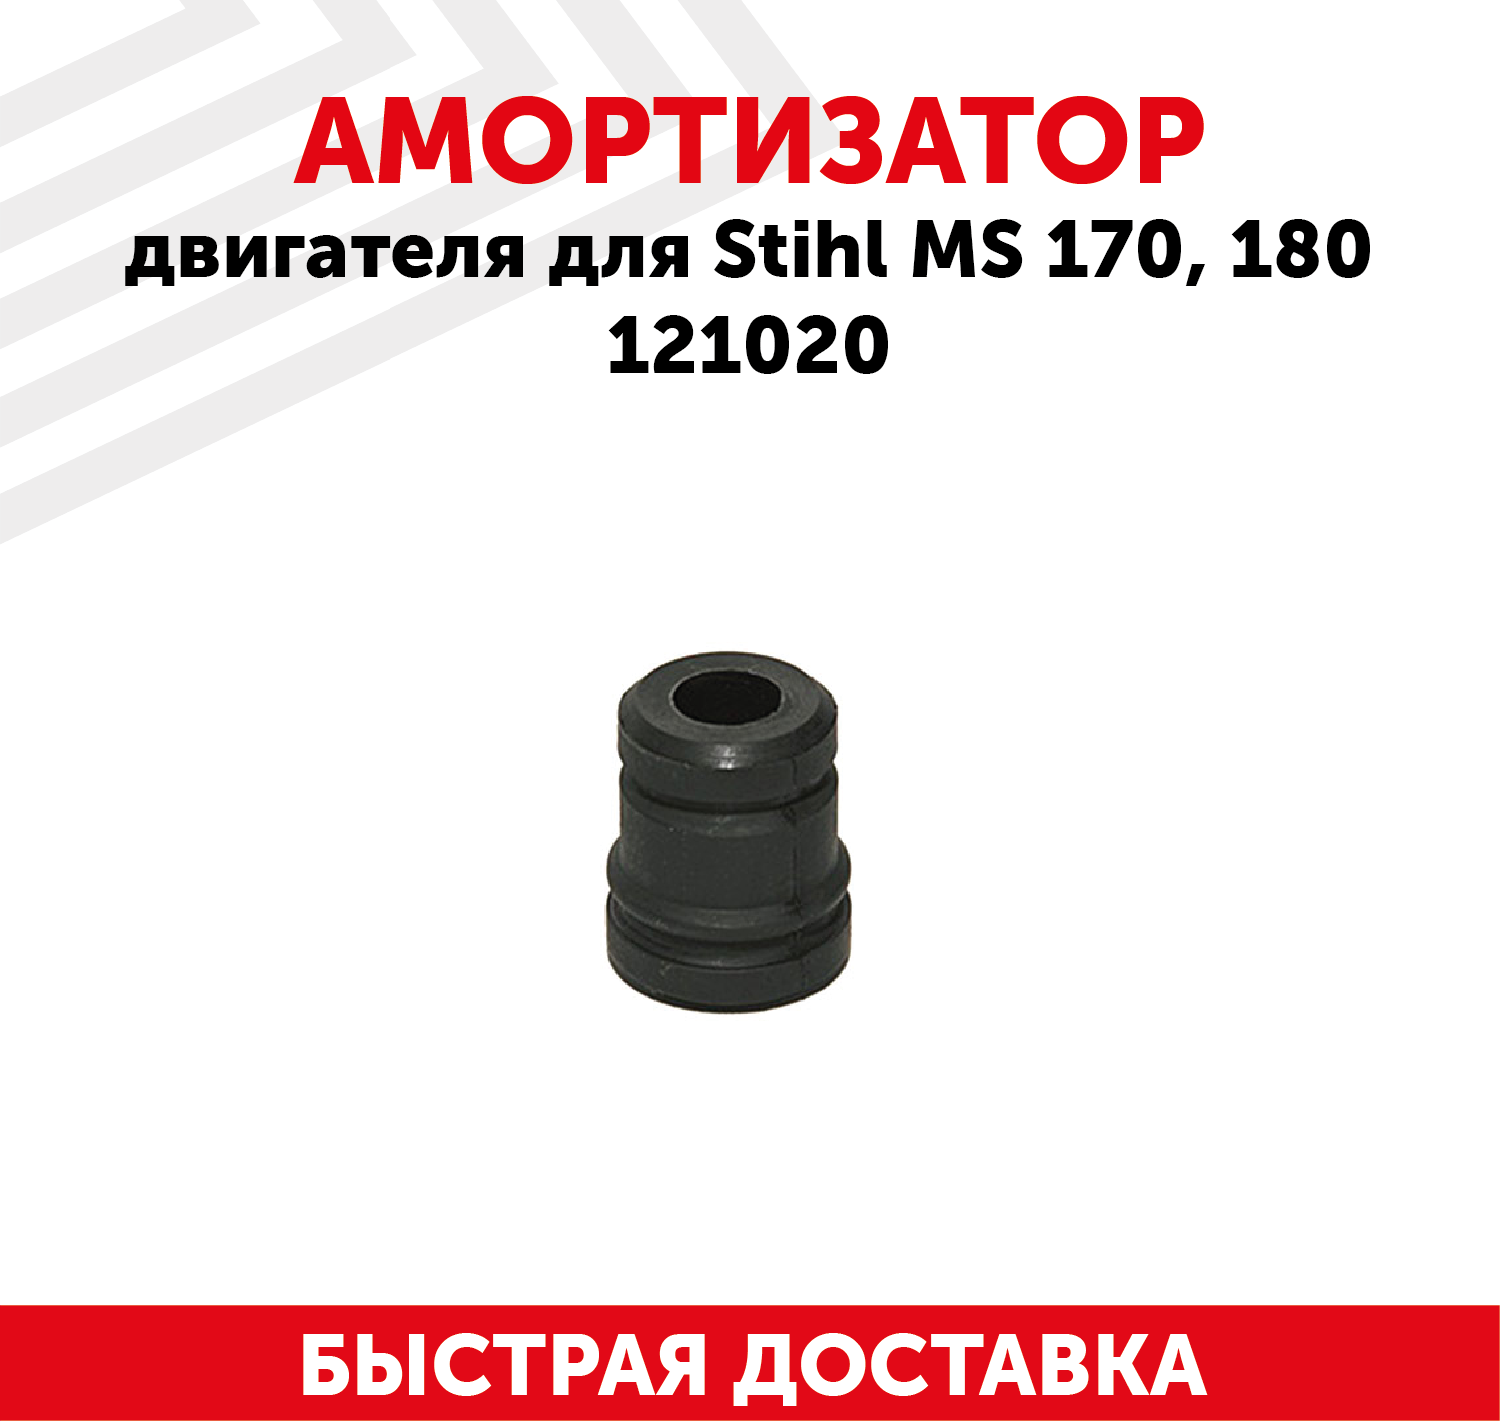 Амортизатор двигателя для бензопилы Stihl MS 170, 180, 121020